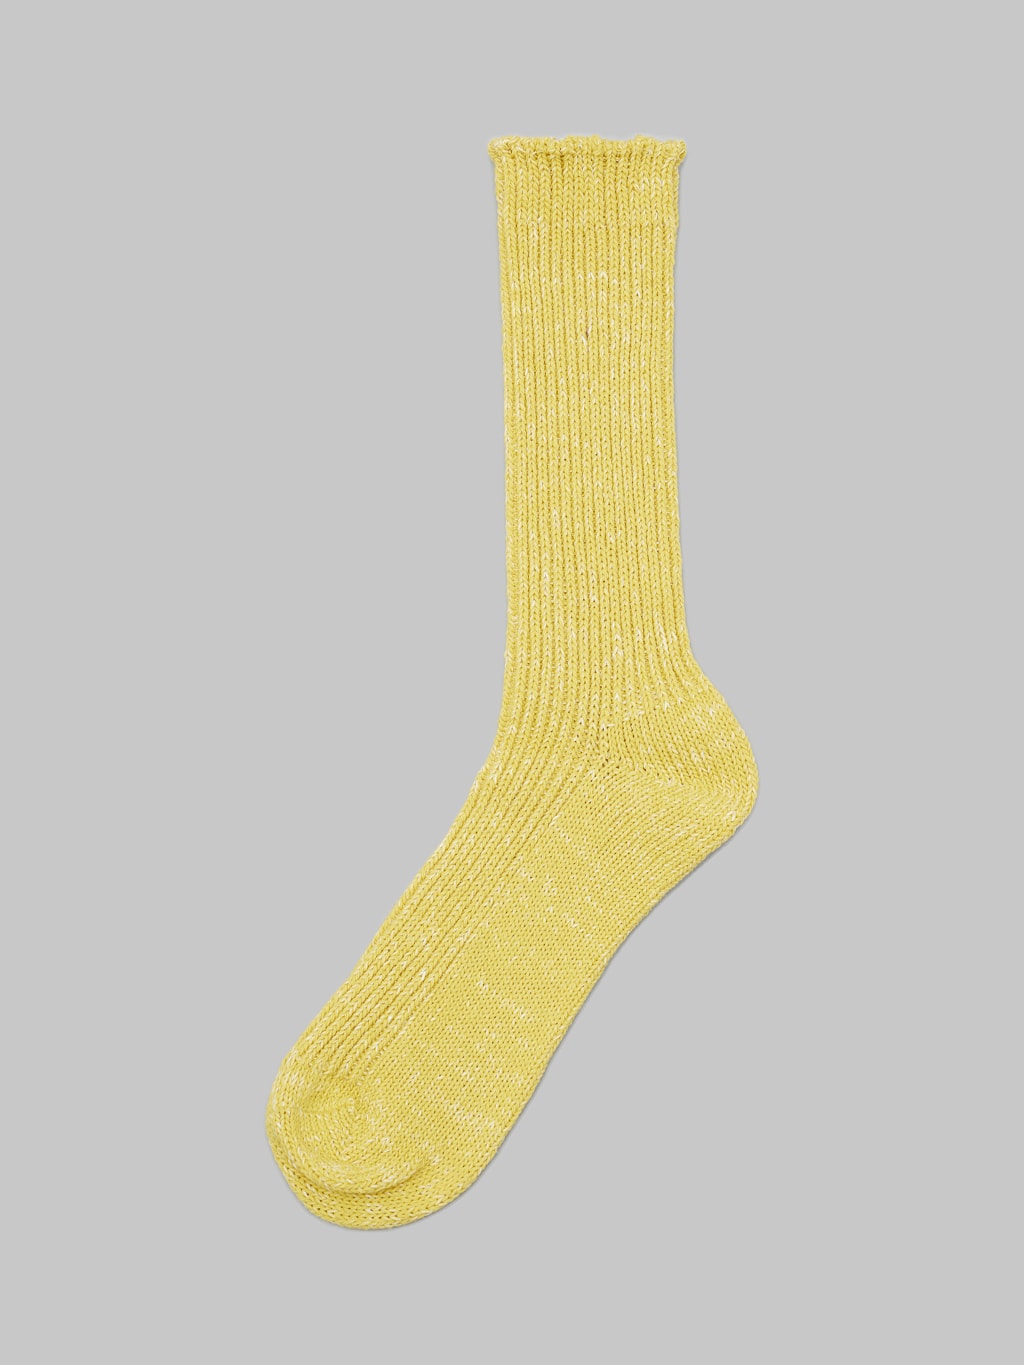 nishiguchi kutsushita hemp cotton ribbed socks vintage yellow soft texture